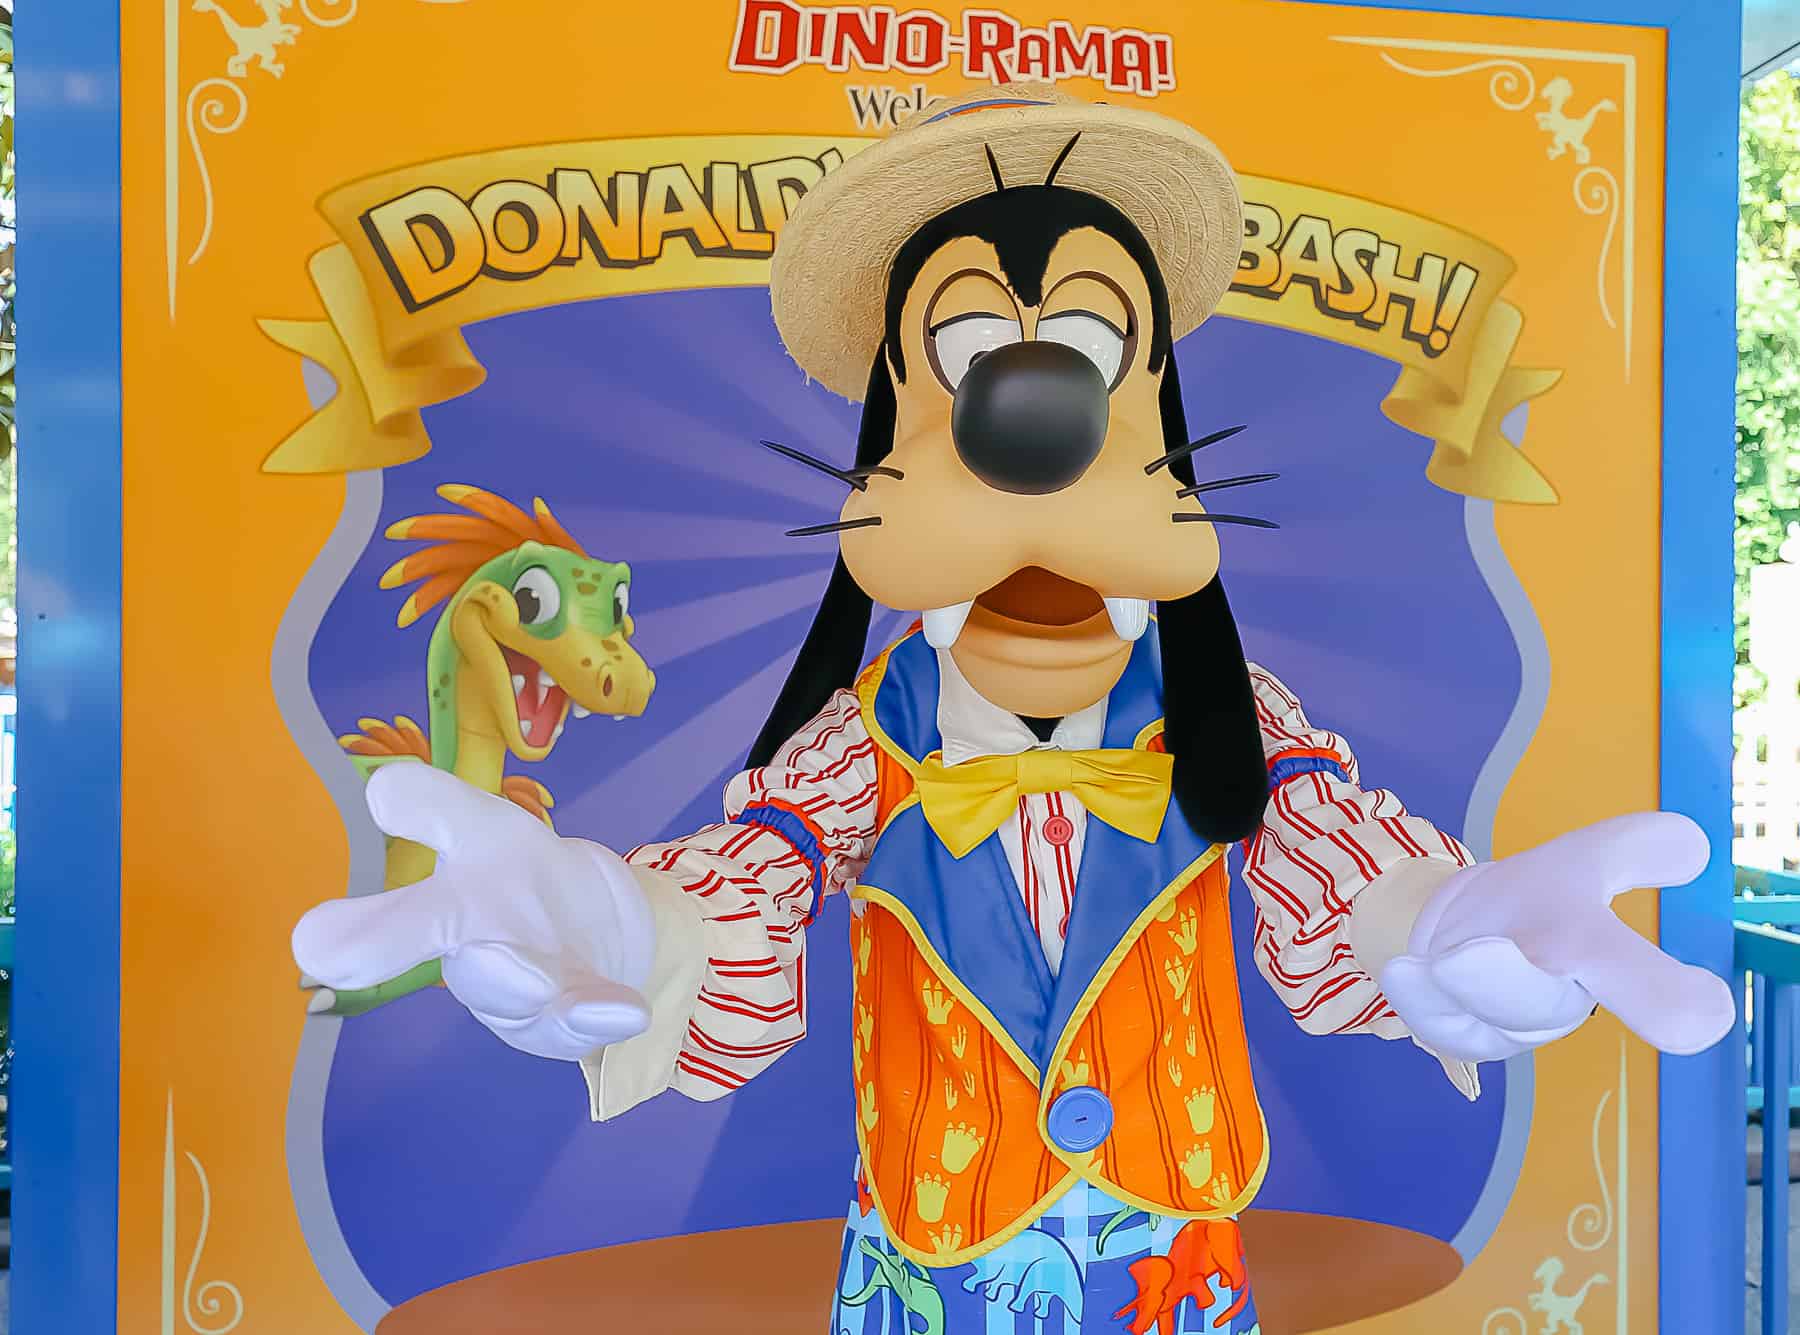 Goofy at Donald's Dino Bash